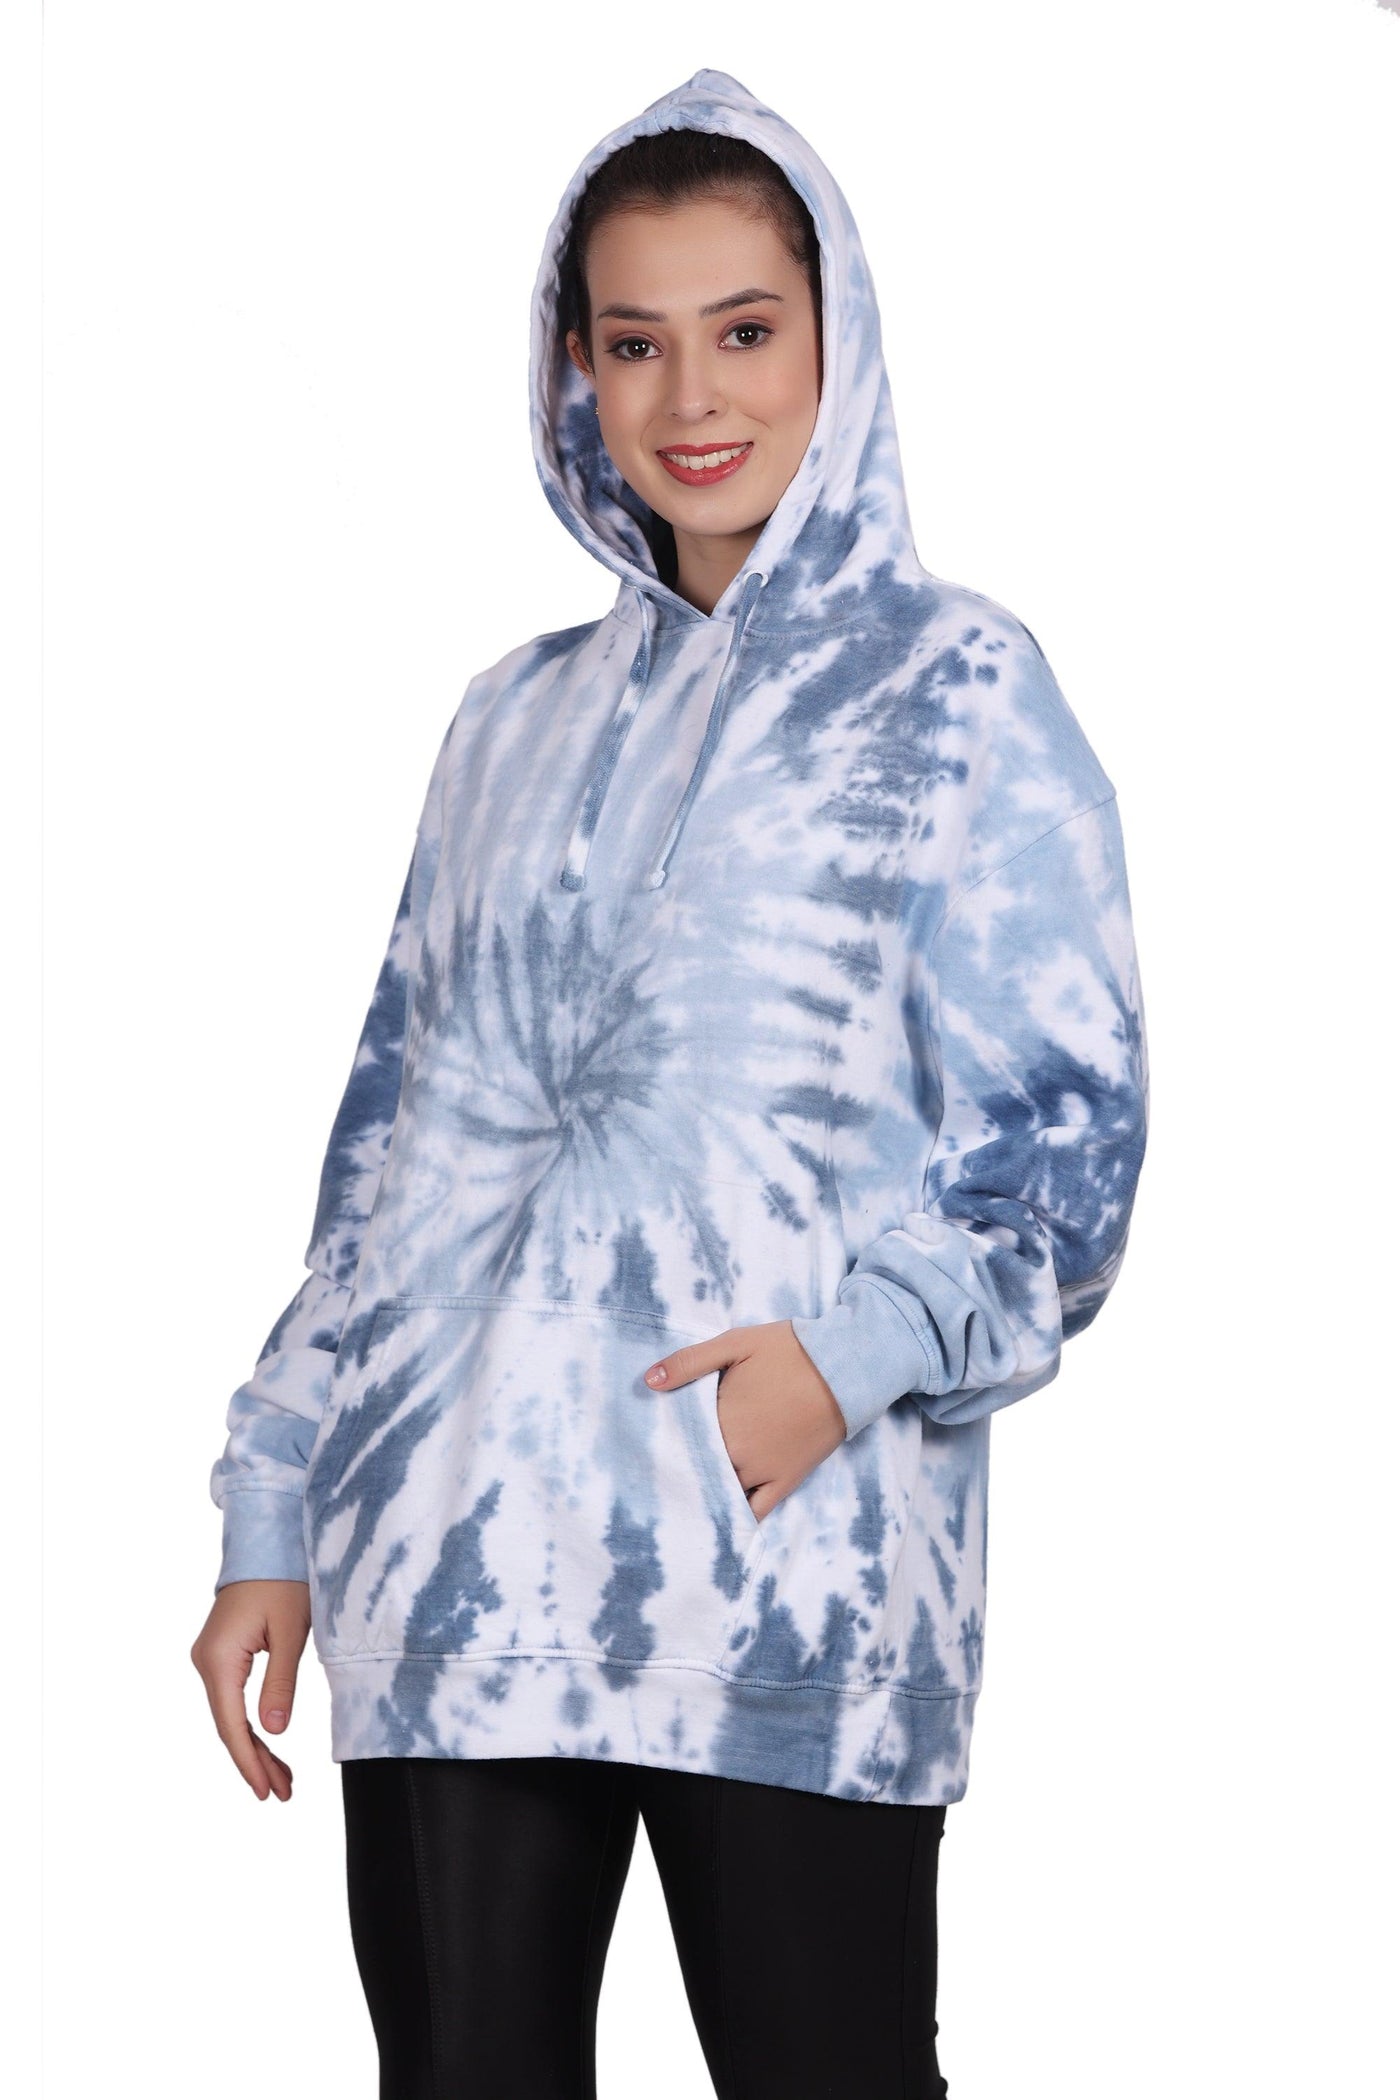 Unisex Tie Dye Pullover Hoodie Premium Cotton Blend Activewear H703  - Advance Apparels Inc